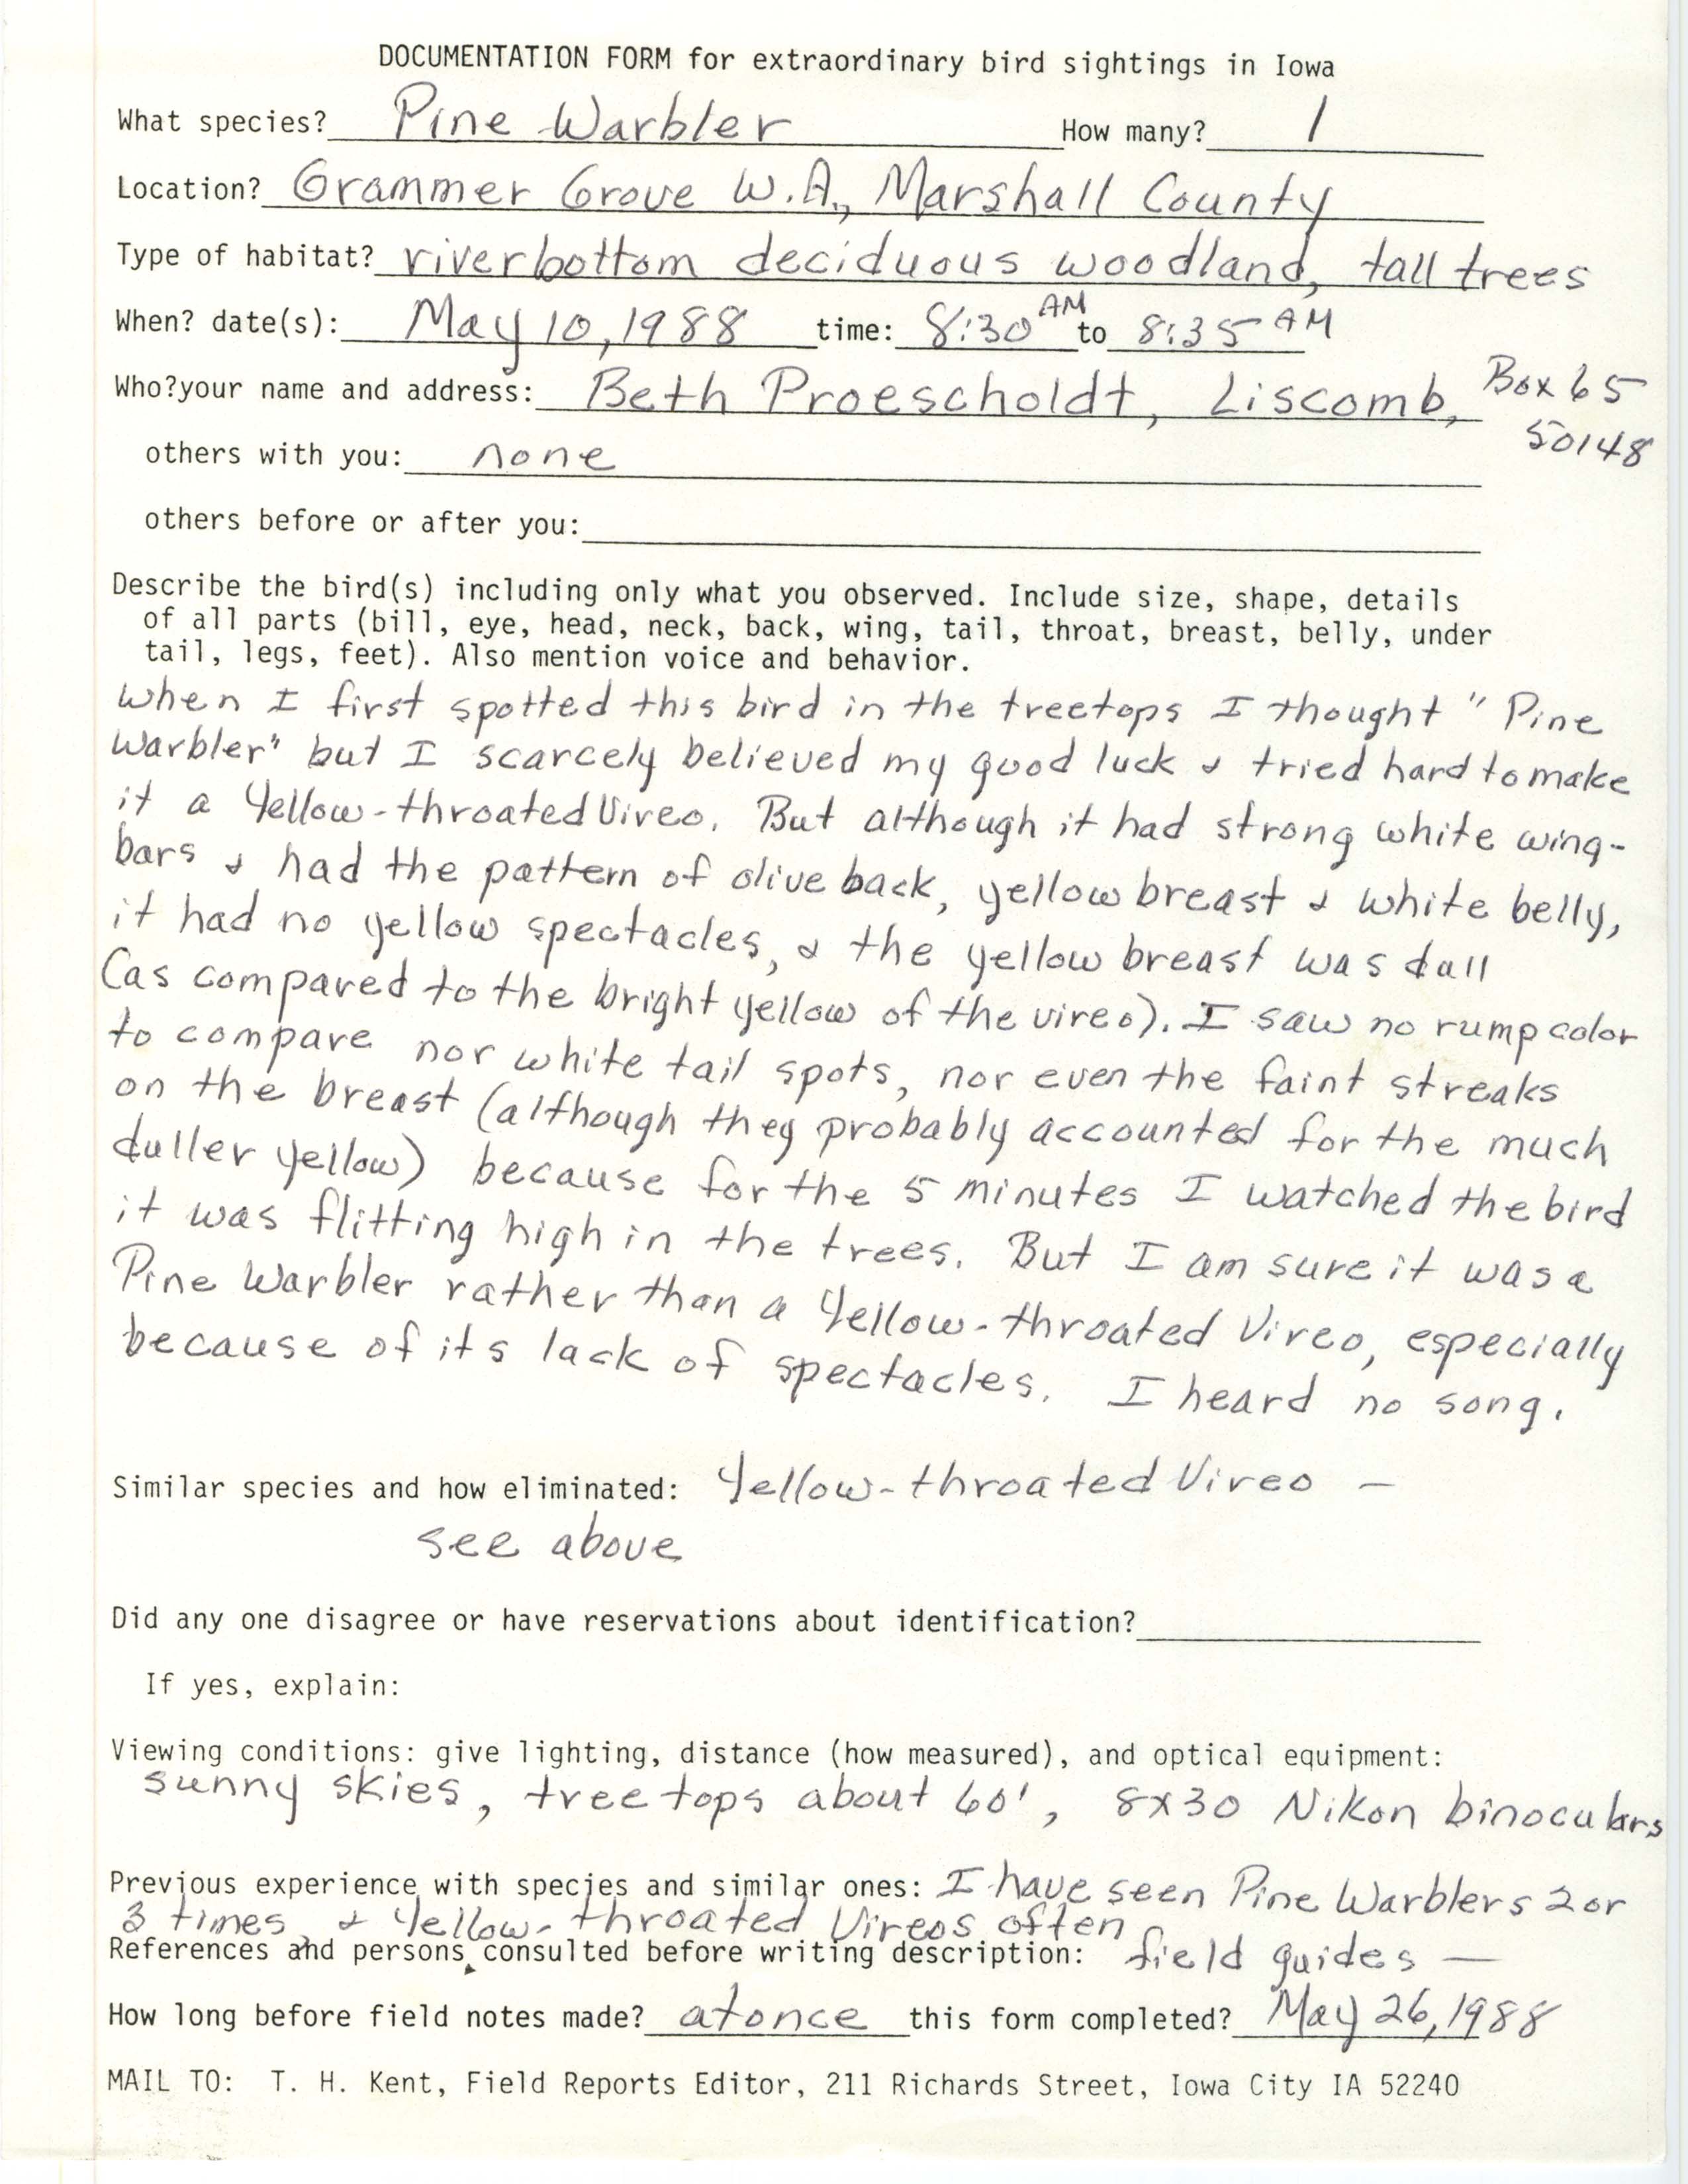 Rare bird documentation form for Pine Warbler at Grammer Grove Wildlife Area, 1988